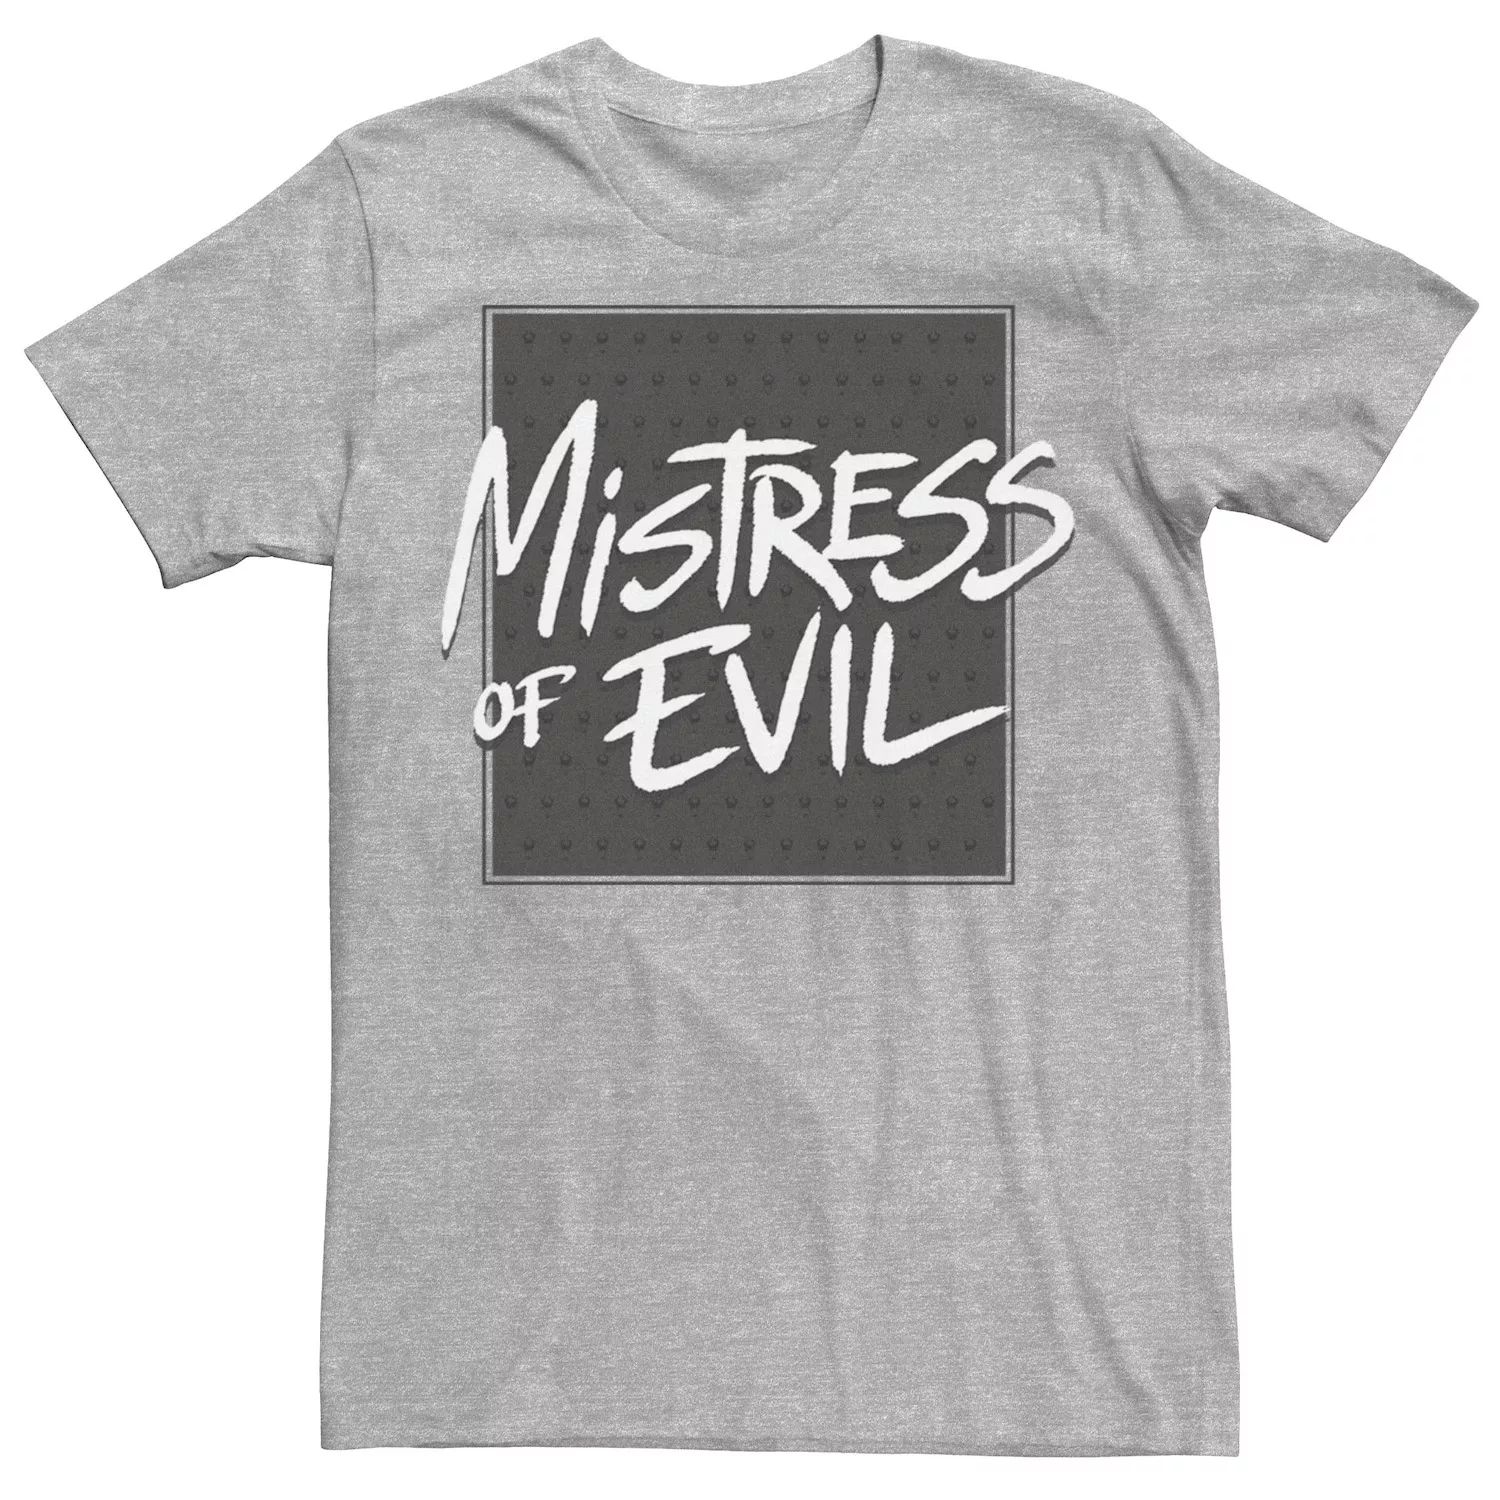 Мужская футболка с надписью Disney Maleficent Mistress Of Evil